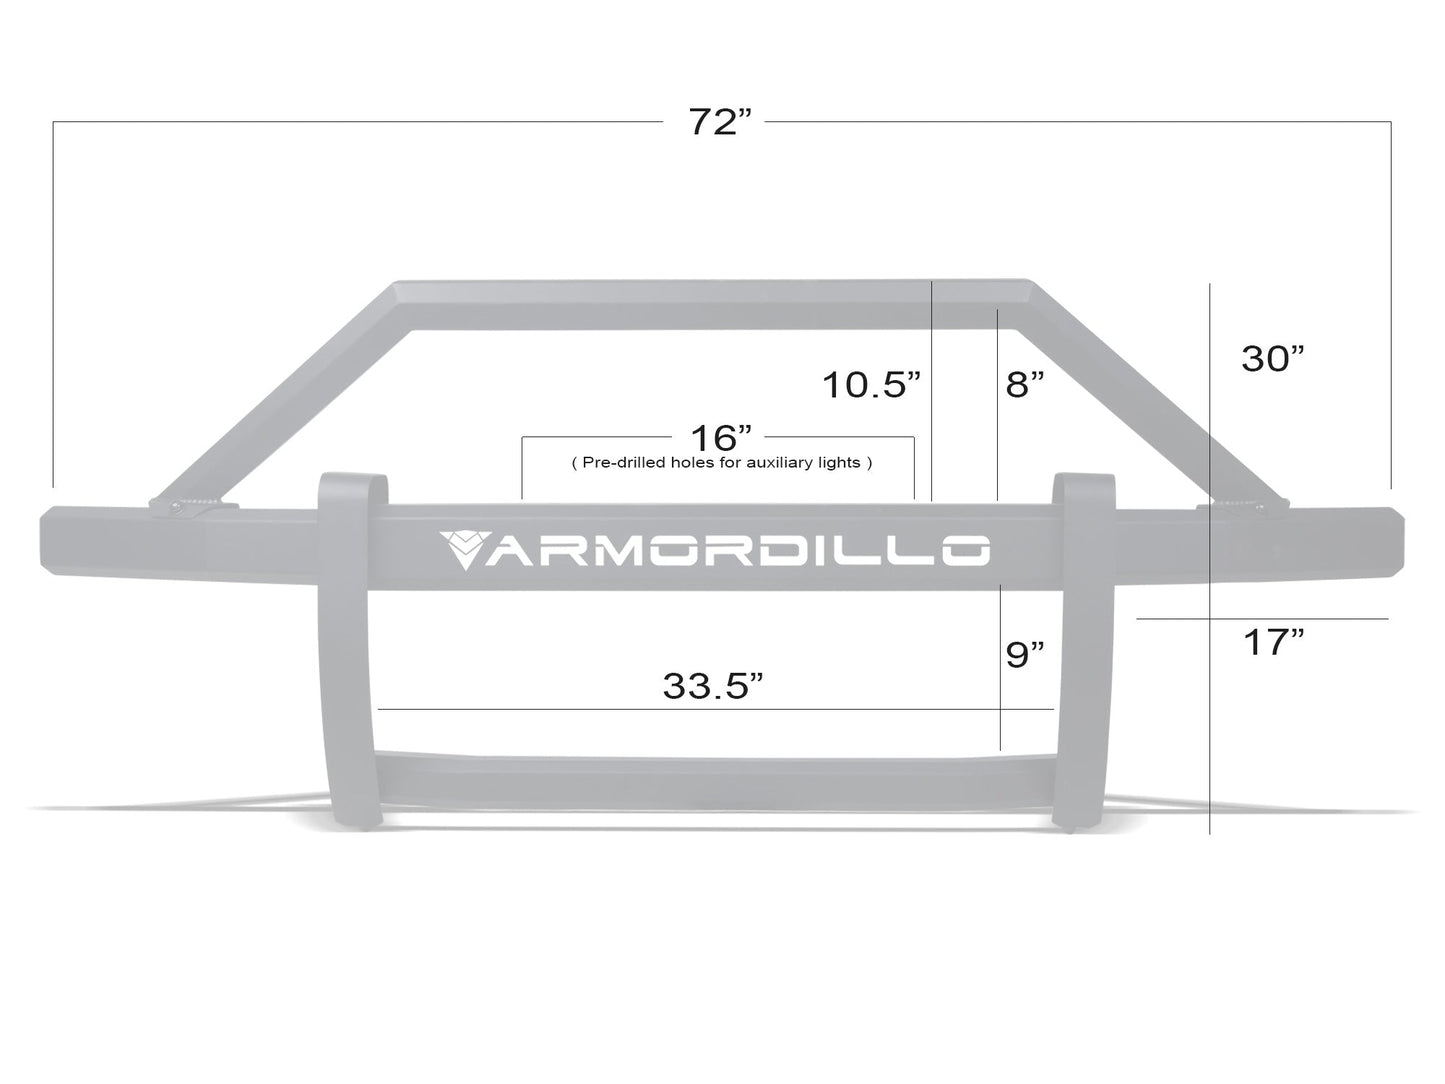 Armordillo 2019-2022 Dodge Ram 1500 AR2 Pre-Runner Guard - Matte Black (EXCLUDING REBEL AND WARLOCK MODELS) - Bayson R Motorsports